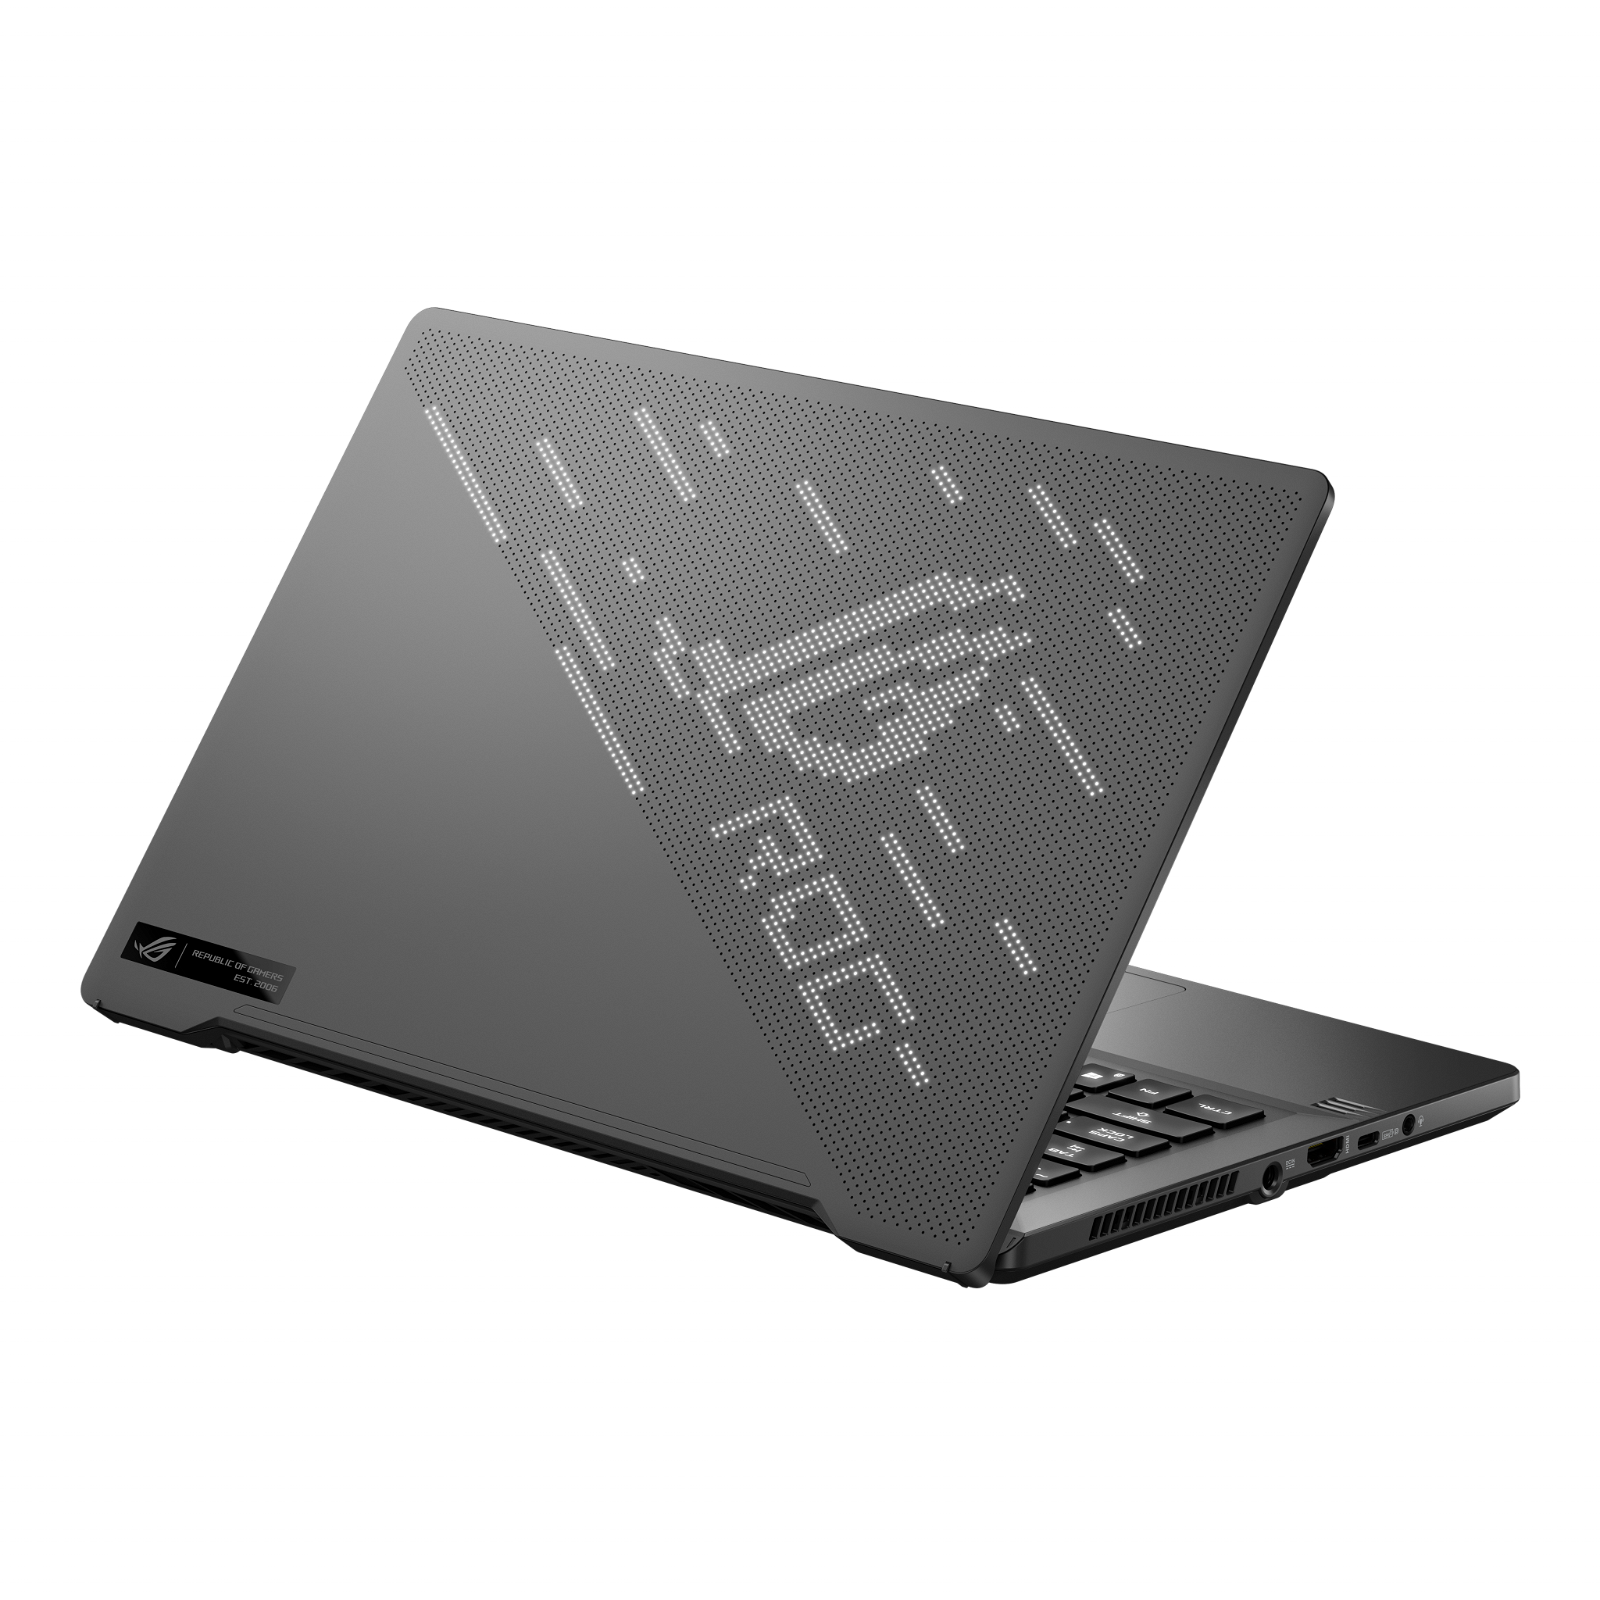 ASUS ROG presenta il nuovo laptop da gaming Zephyrus G14